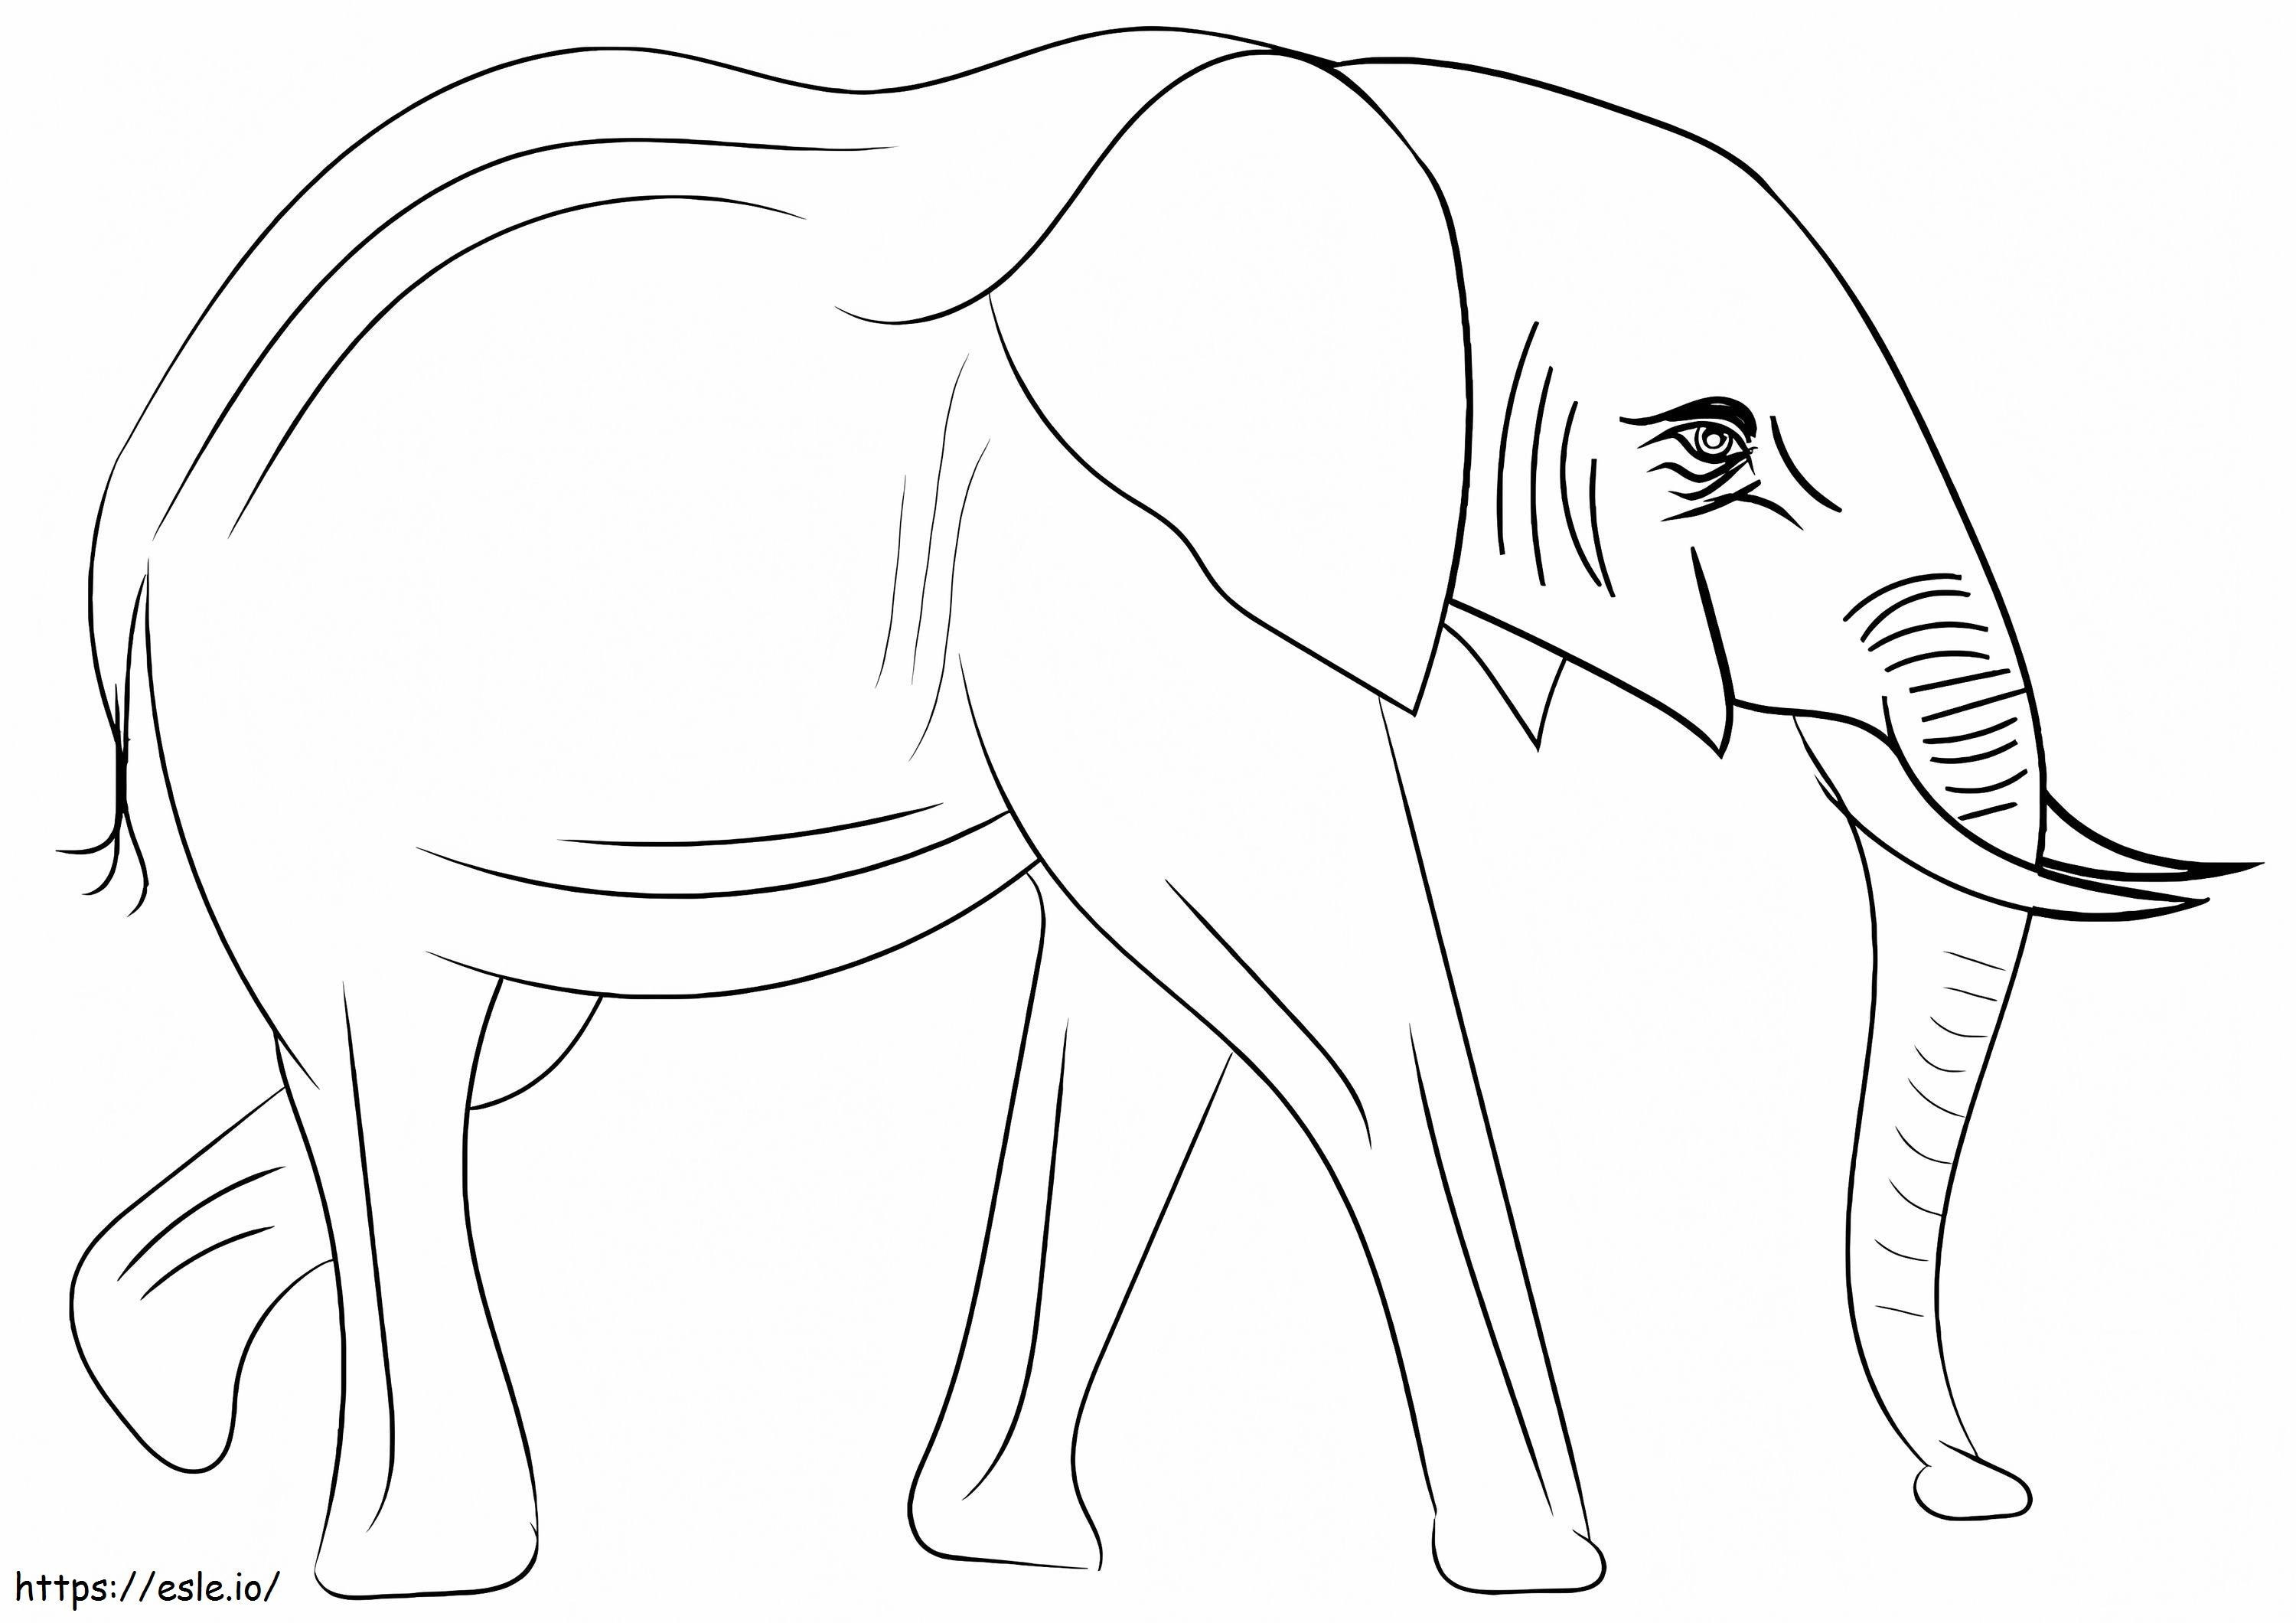 Afrikanischer Elefant ausmalbilder